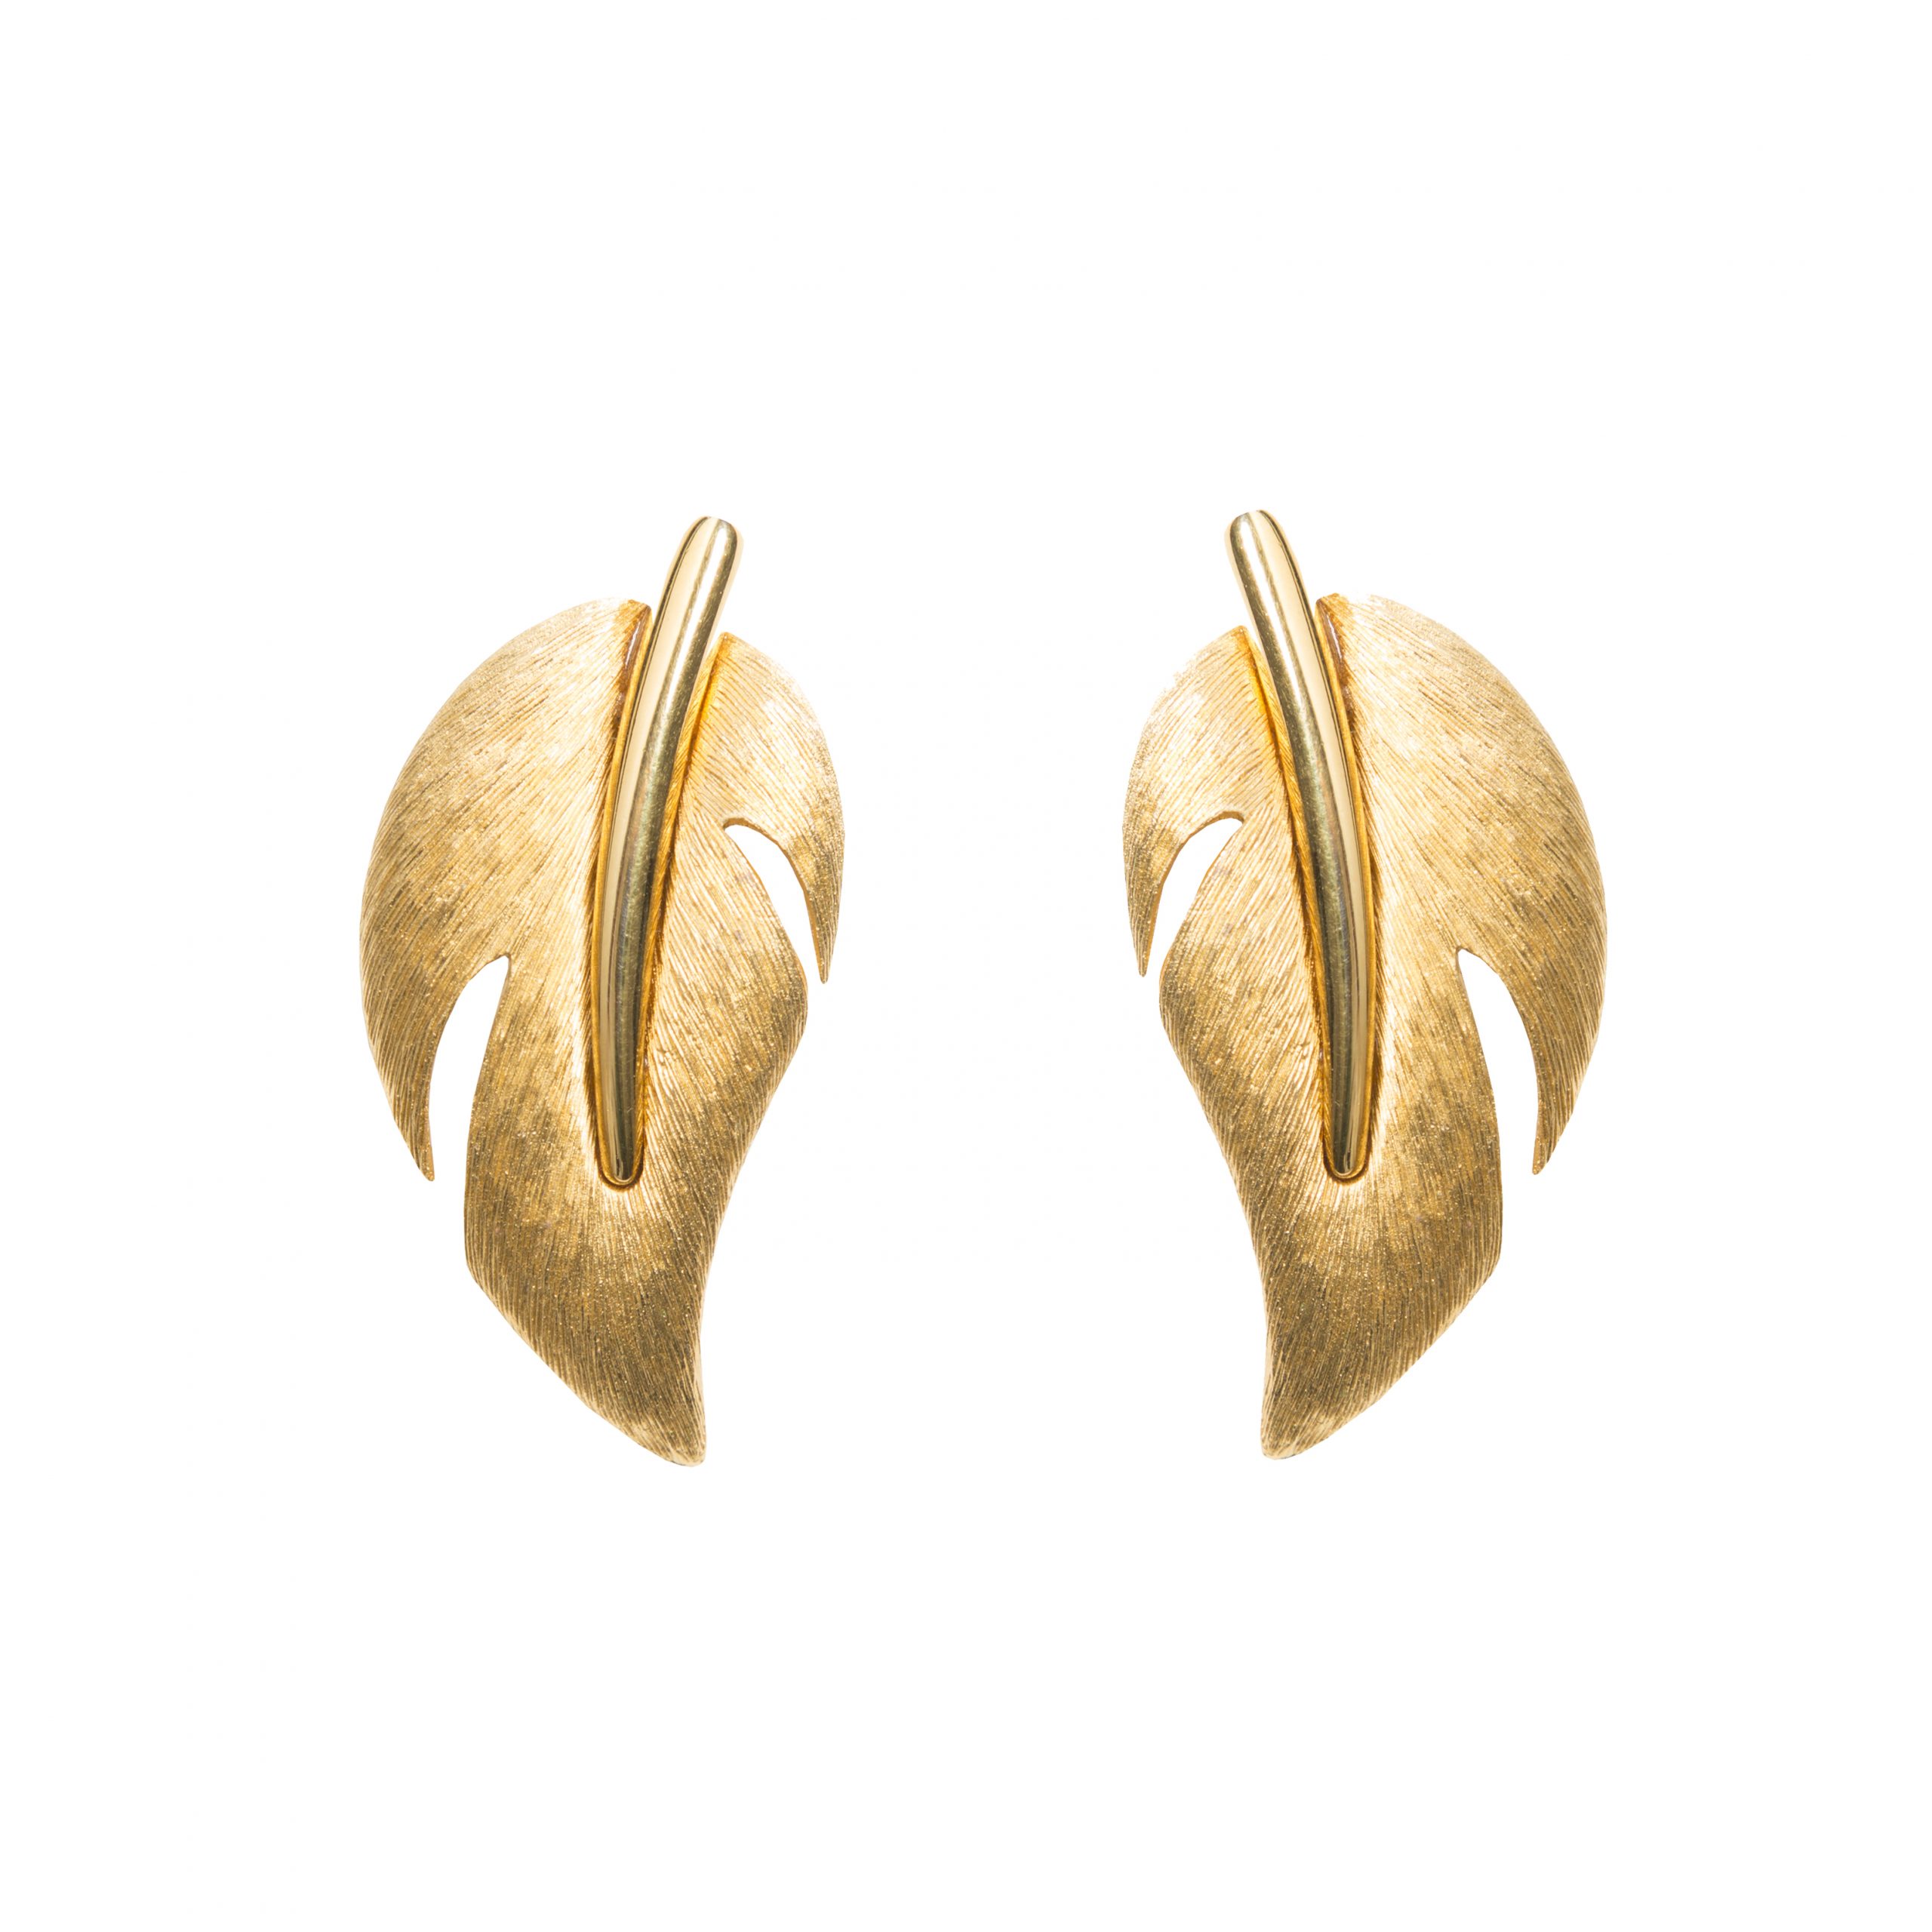 Vintage shiny gold leaf earrings